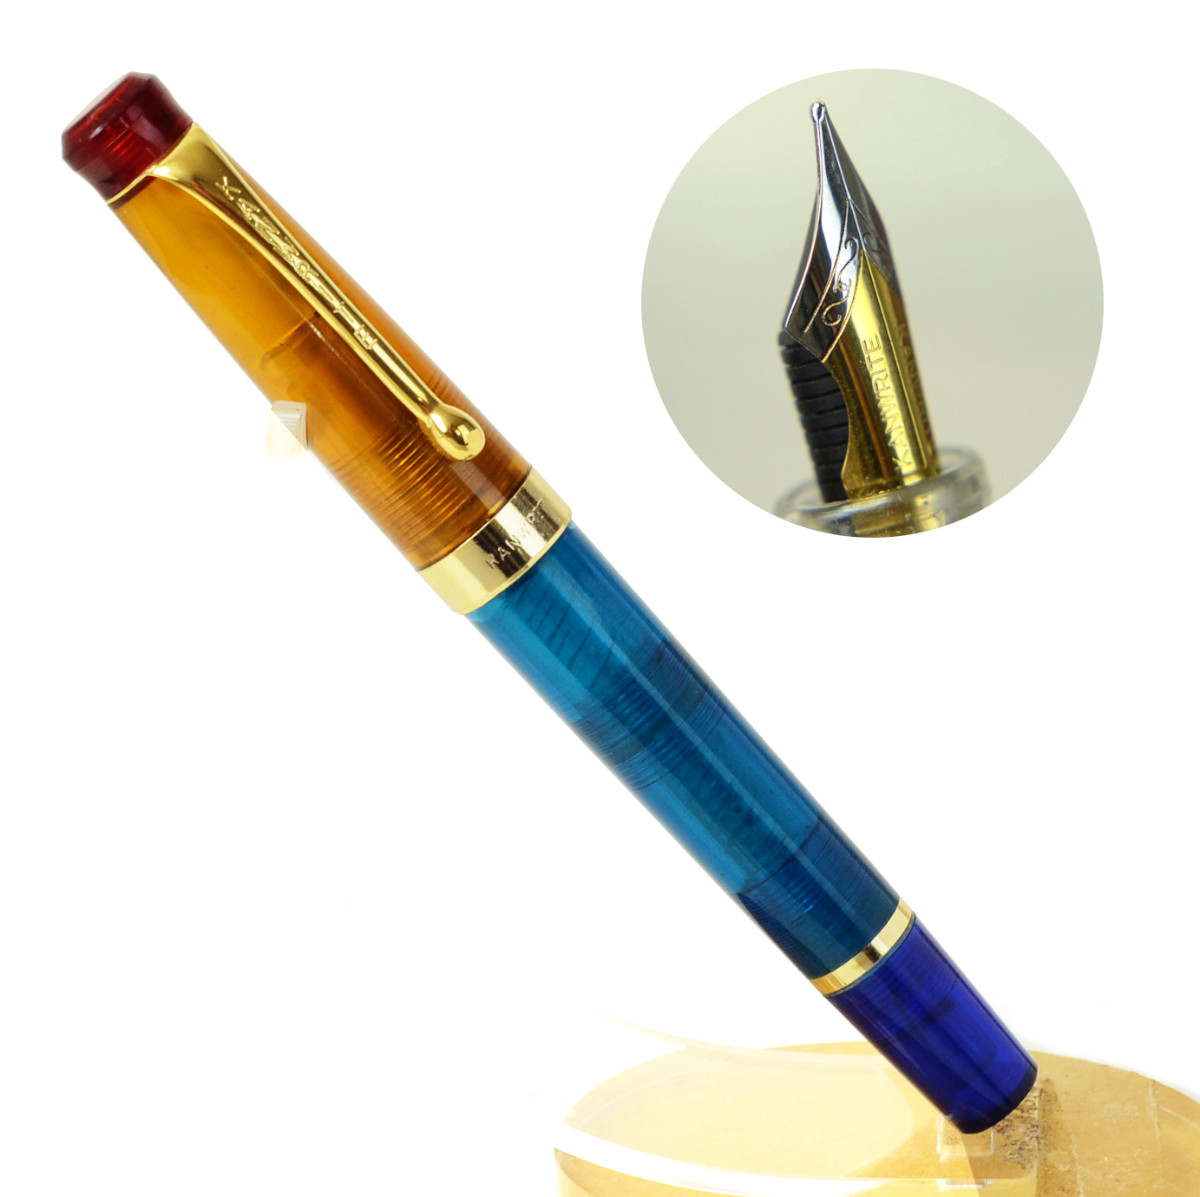 Kanwrite Heritage Kingfisher piston filler fountain pen  – Full Flex Medium nib